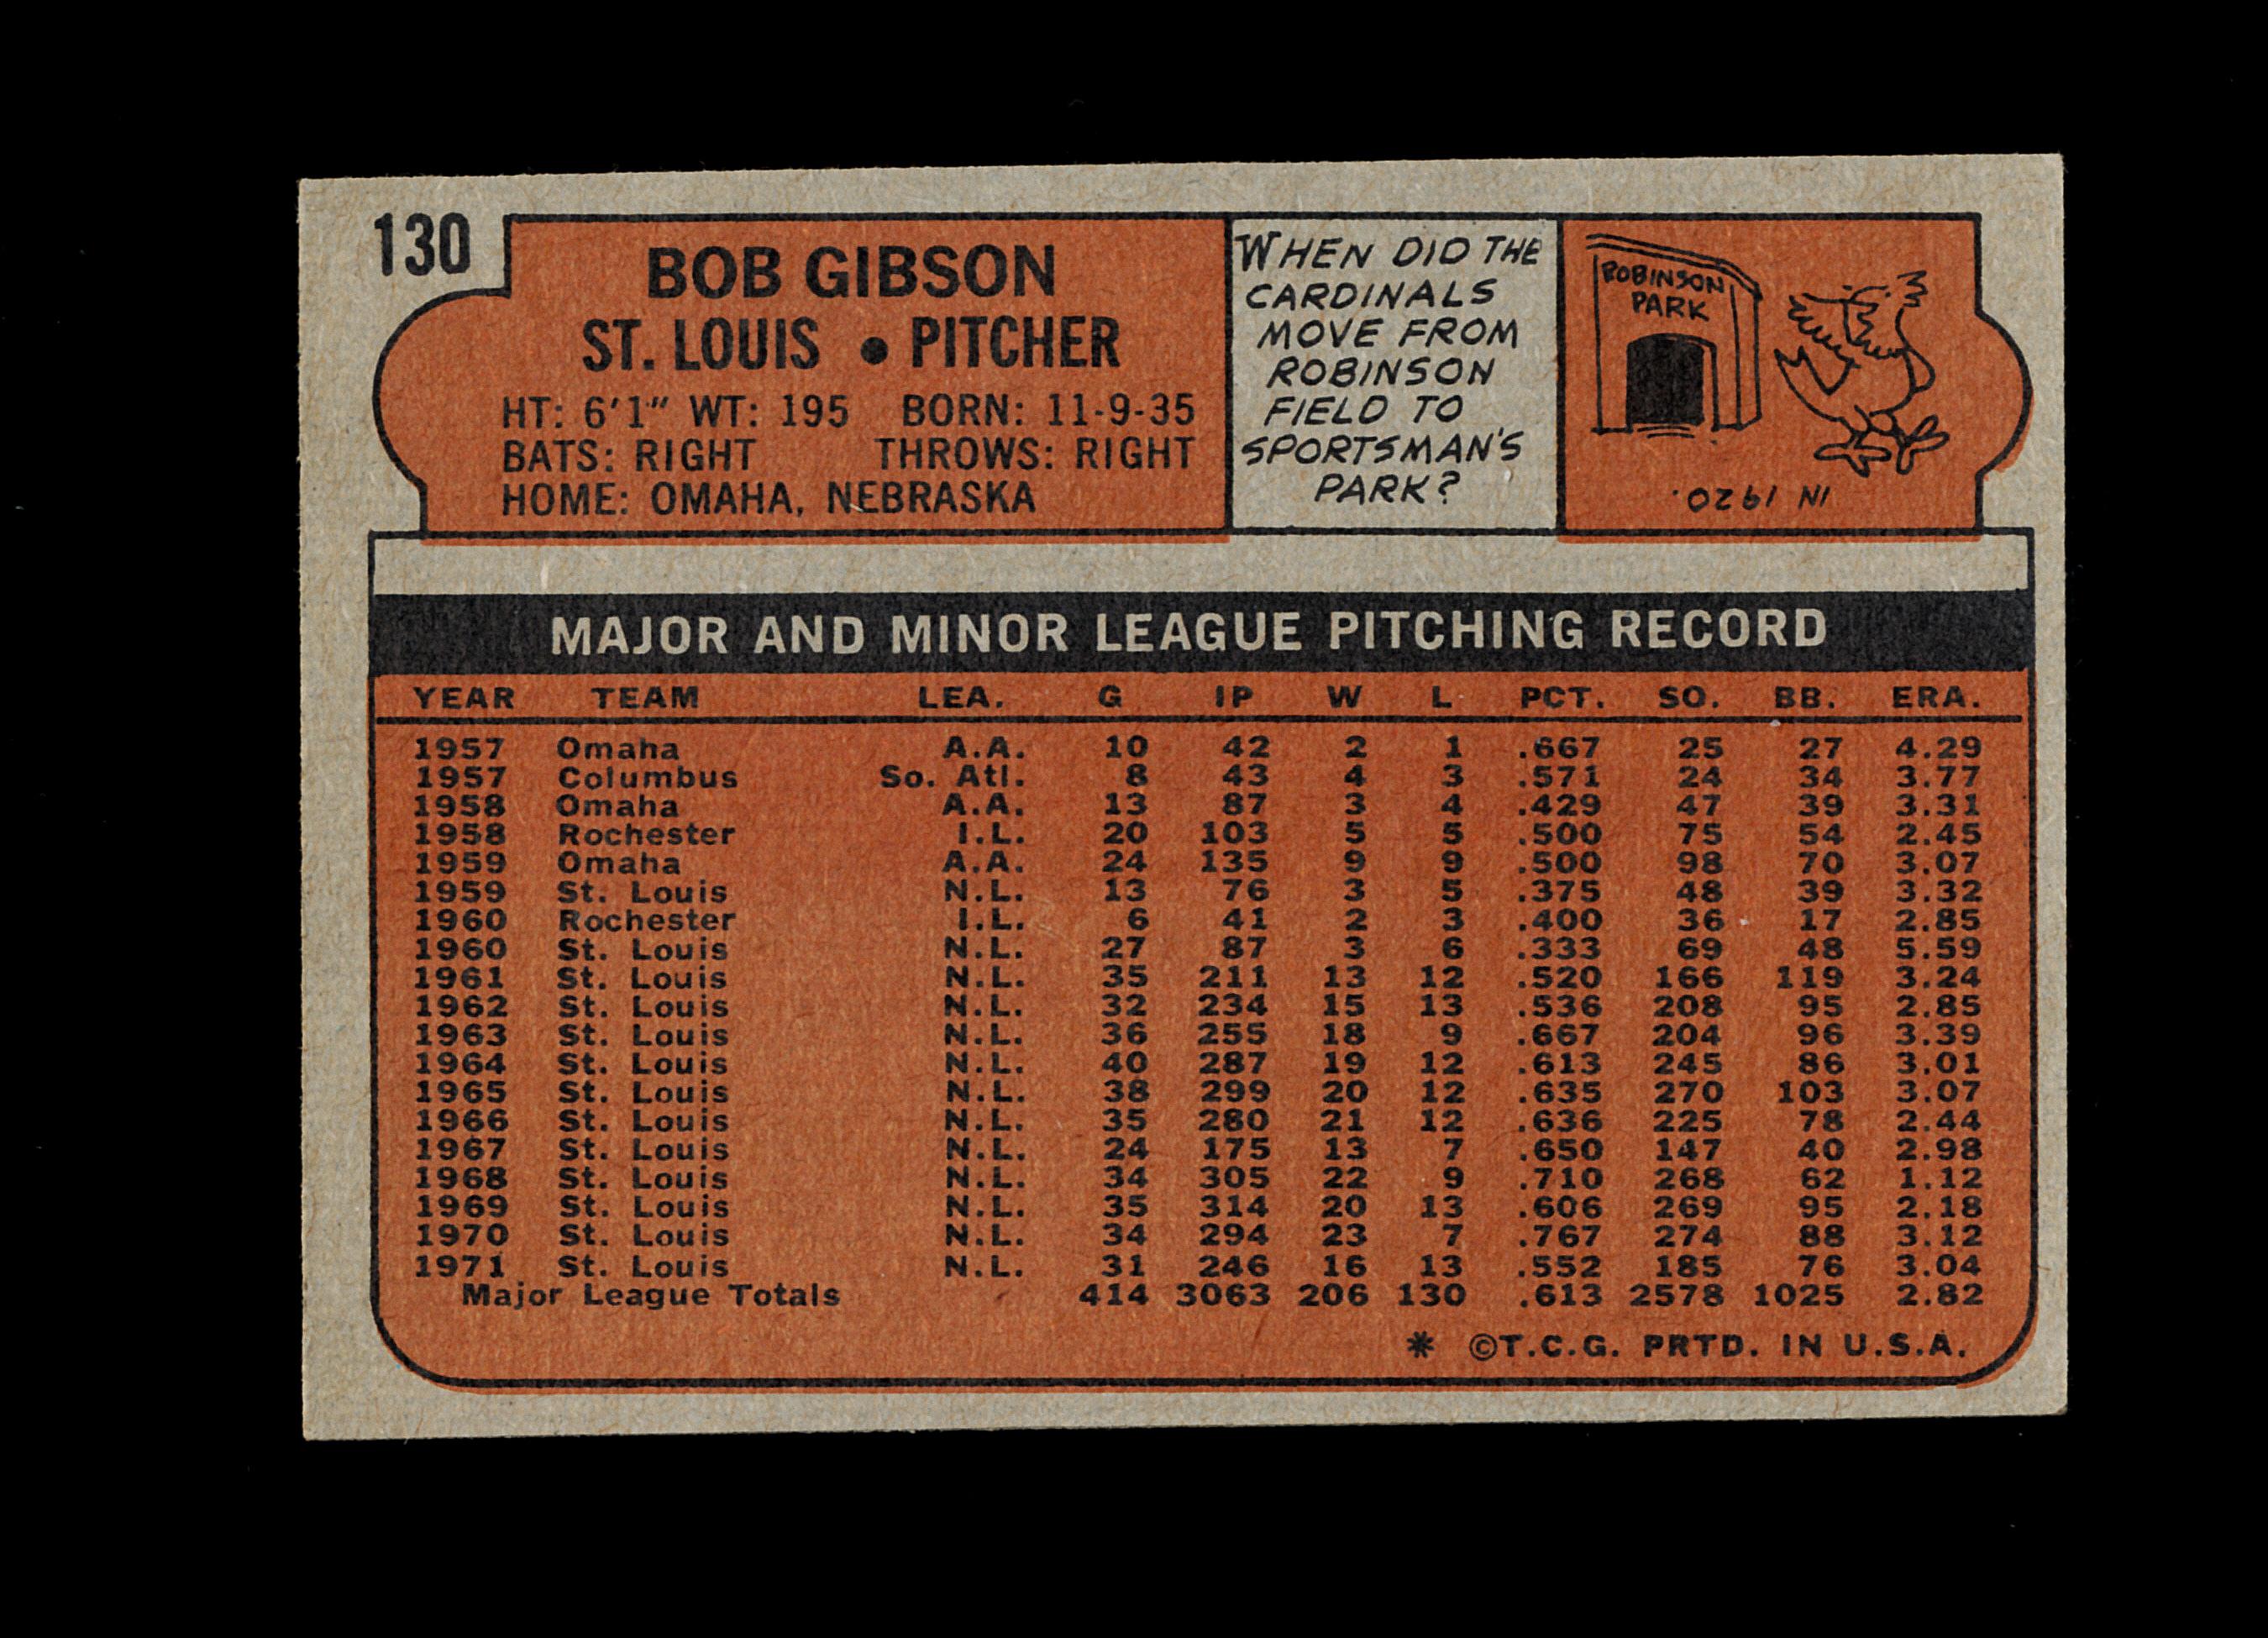 1972 Topps Baseball Card #130 Hall of Famer Bob Gibson St Louis Cardinals